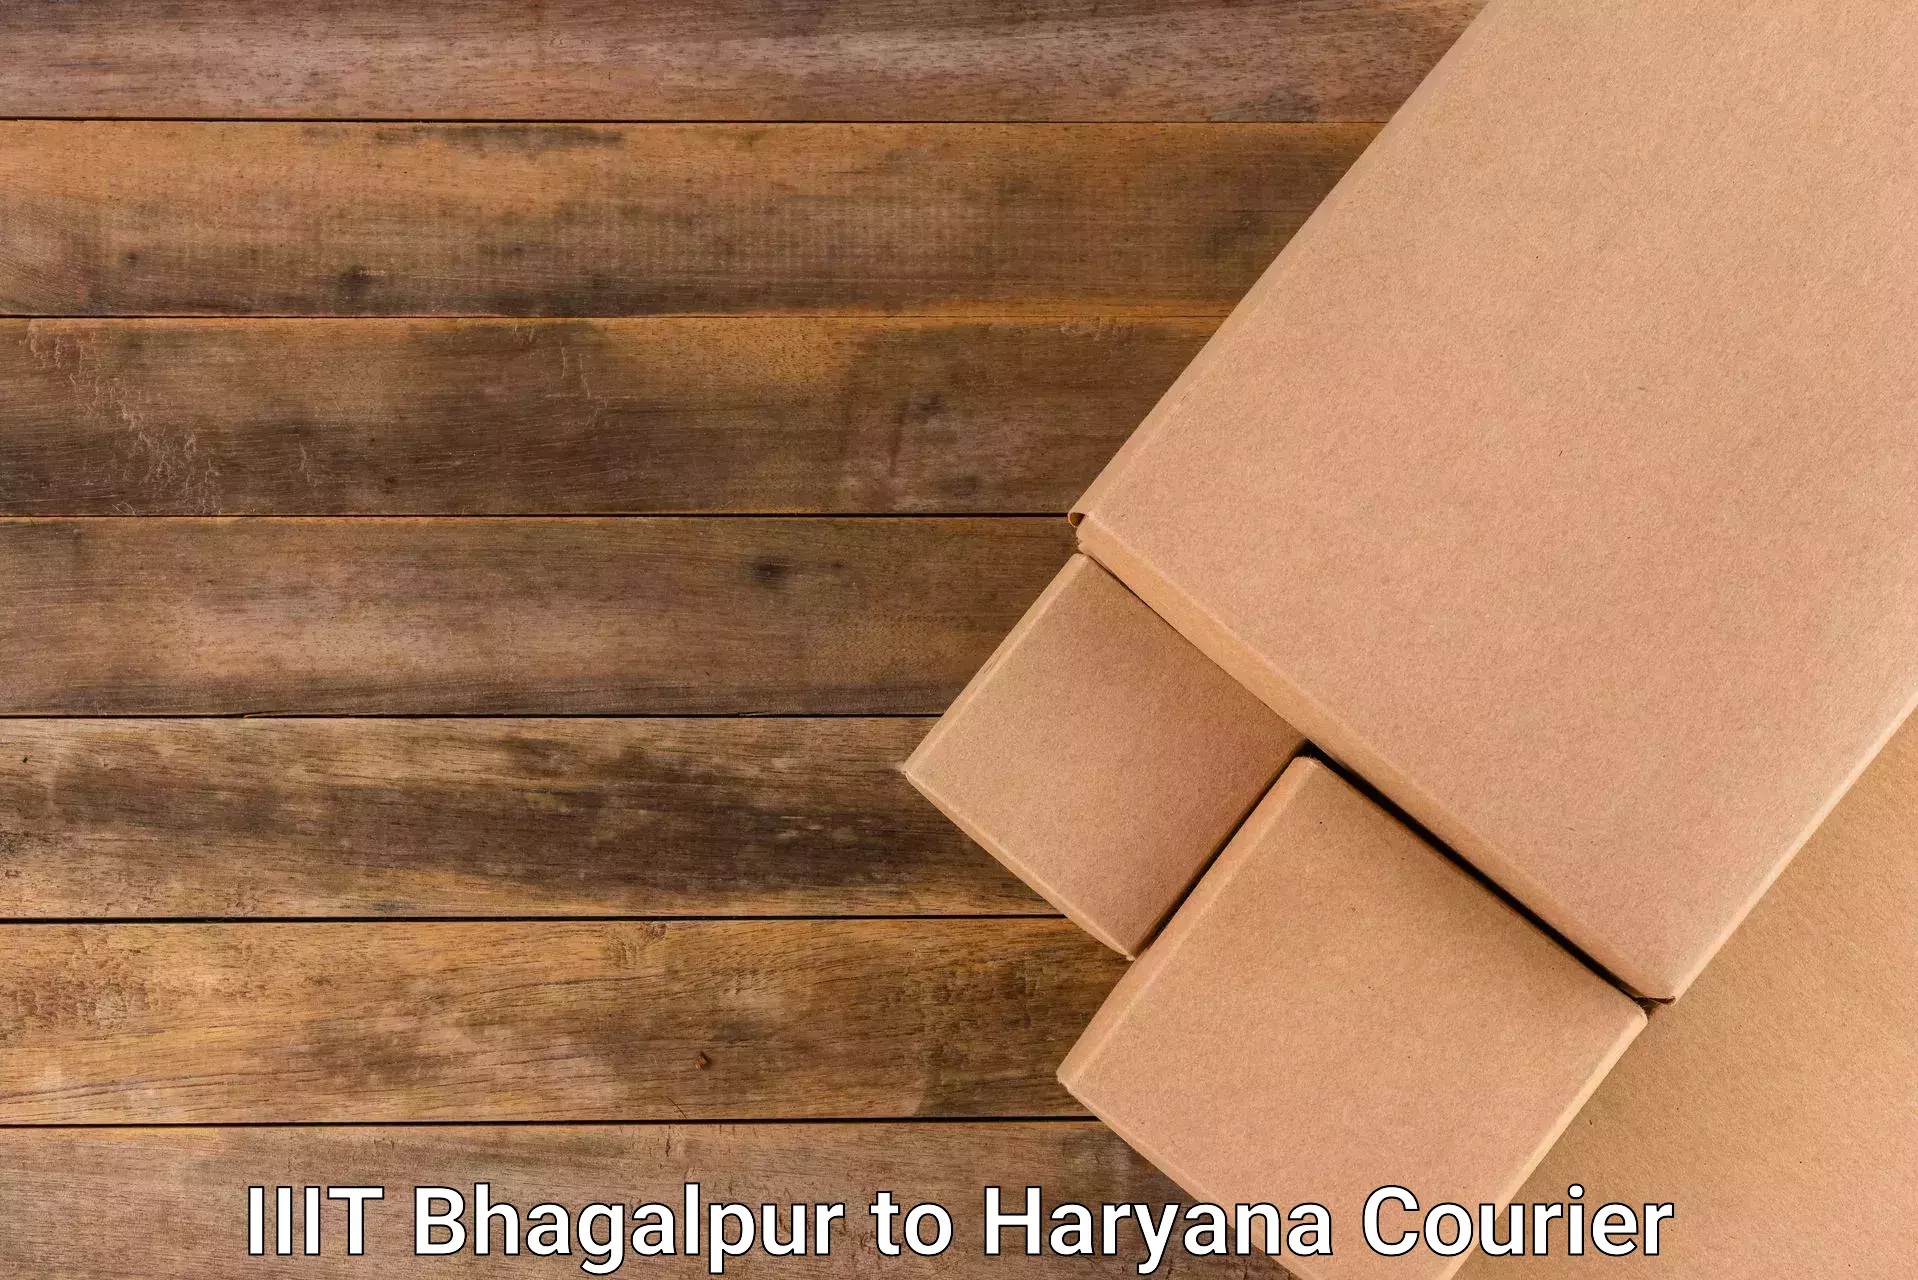 Cash on delivery service IIIT Bhagalpur to Gurugram